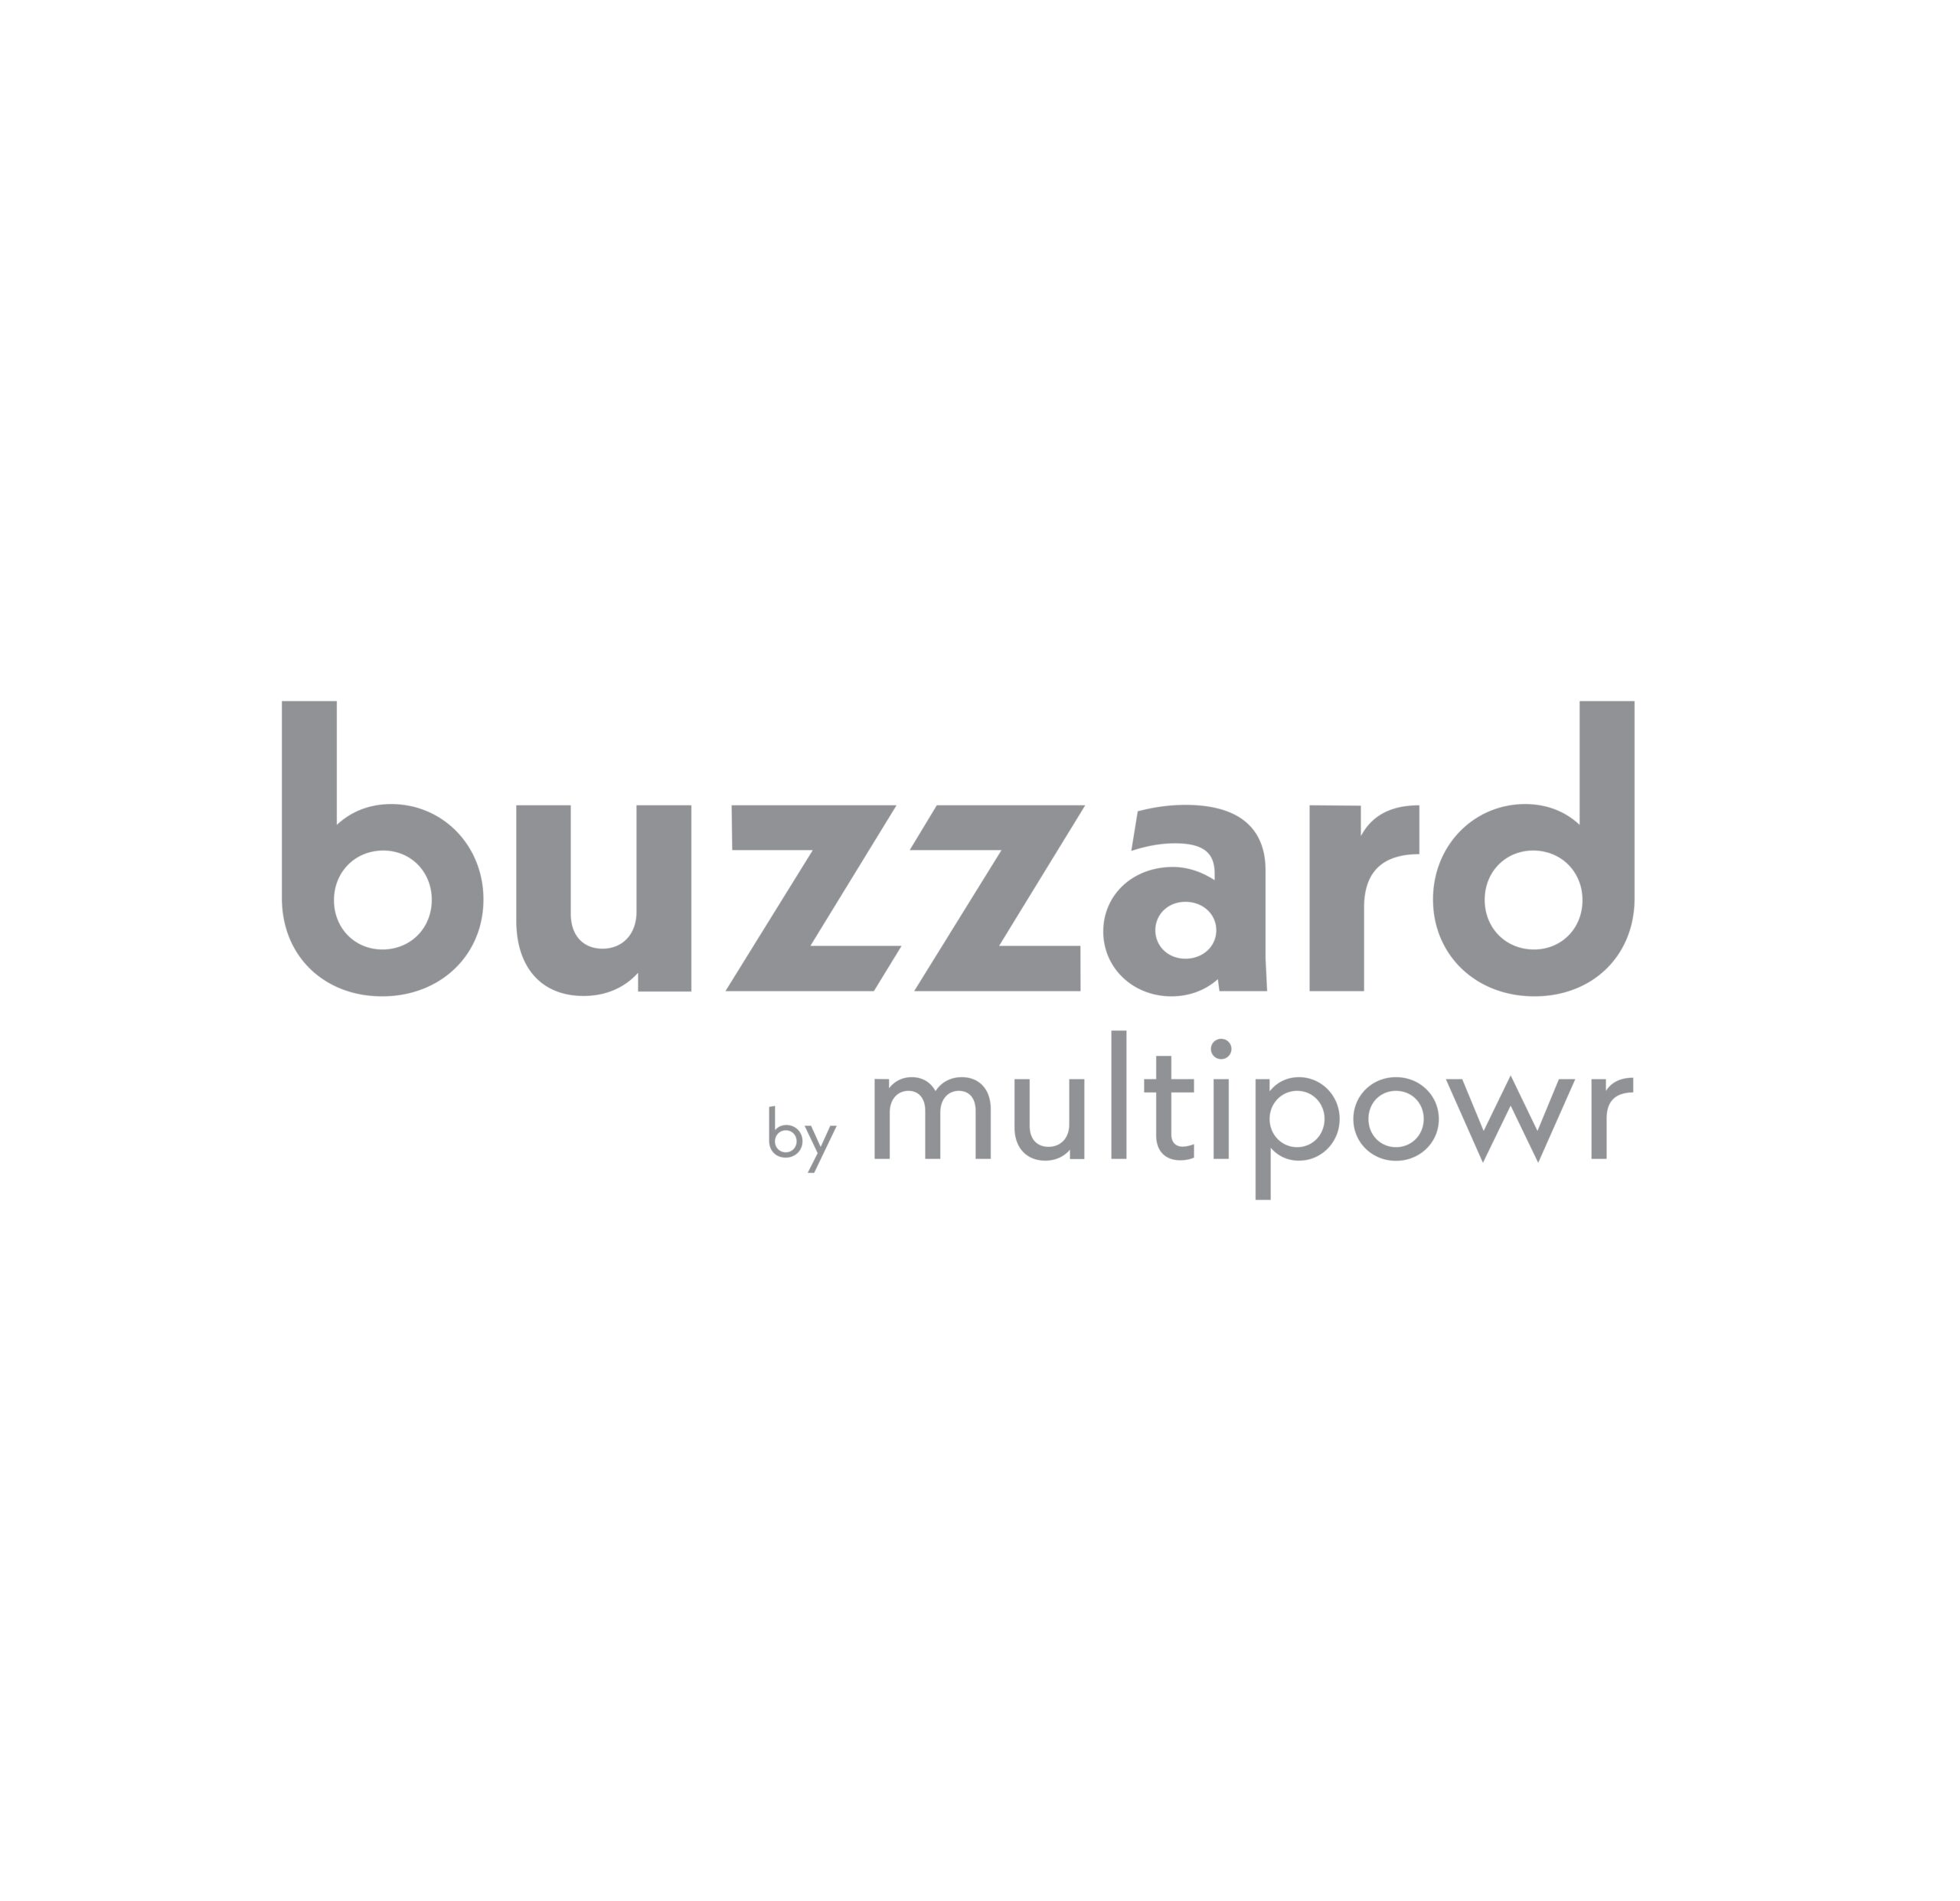 Buzzard by Multipowr